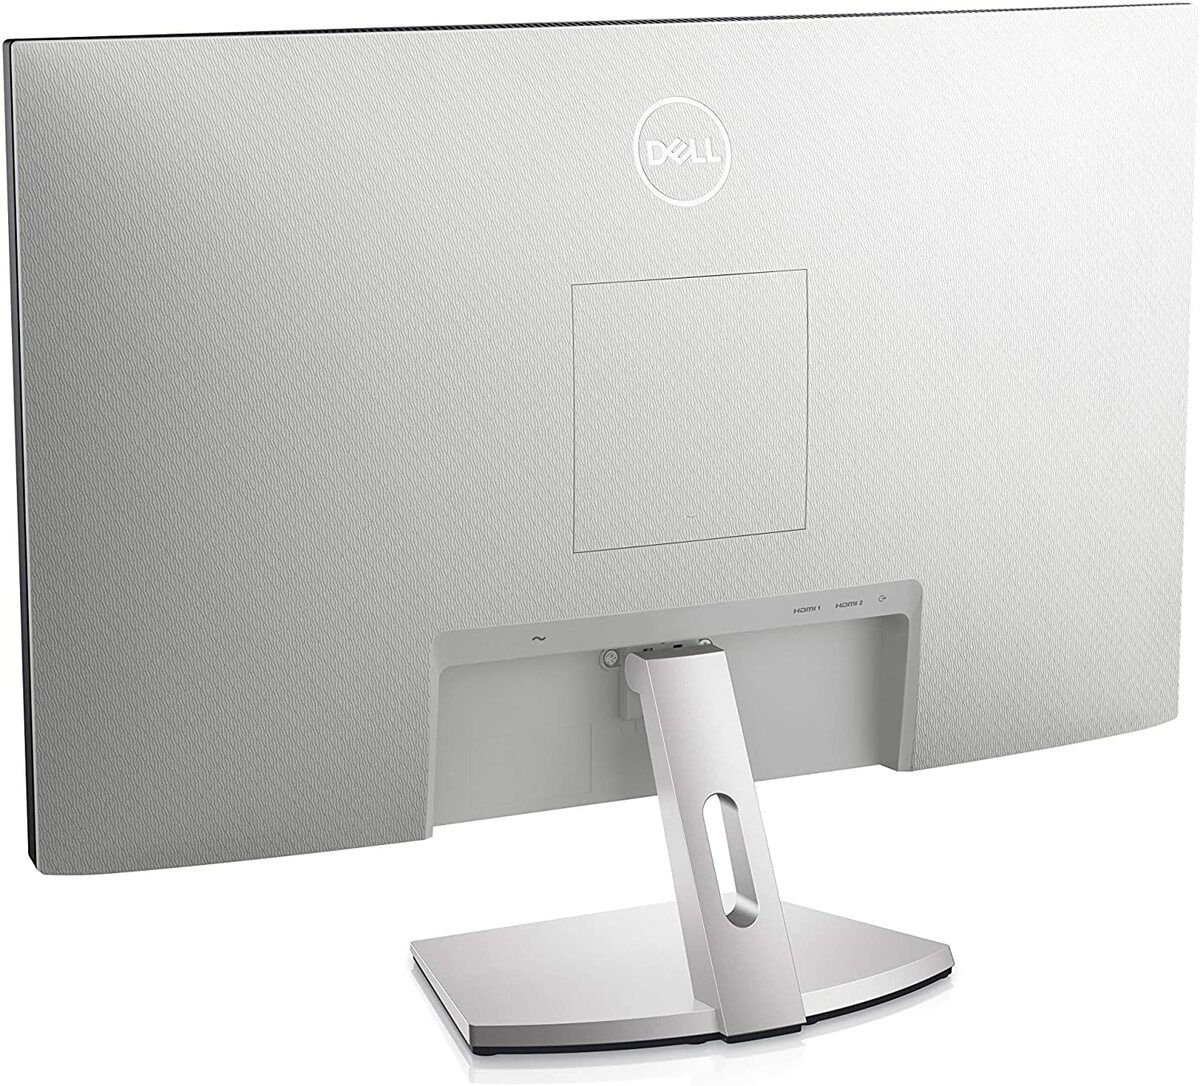 Dell 27-inch IPS Full HD Borderless Led Monitor With AMD FreeSync,75Hz,(Vesa - S2721HN)